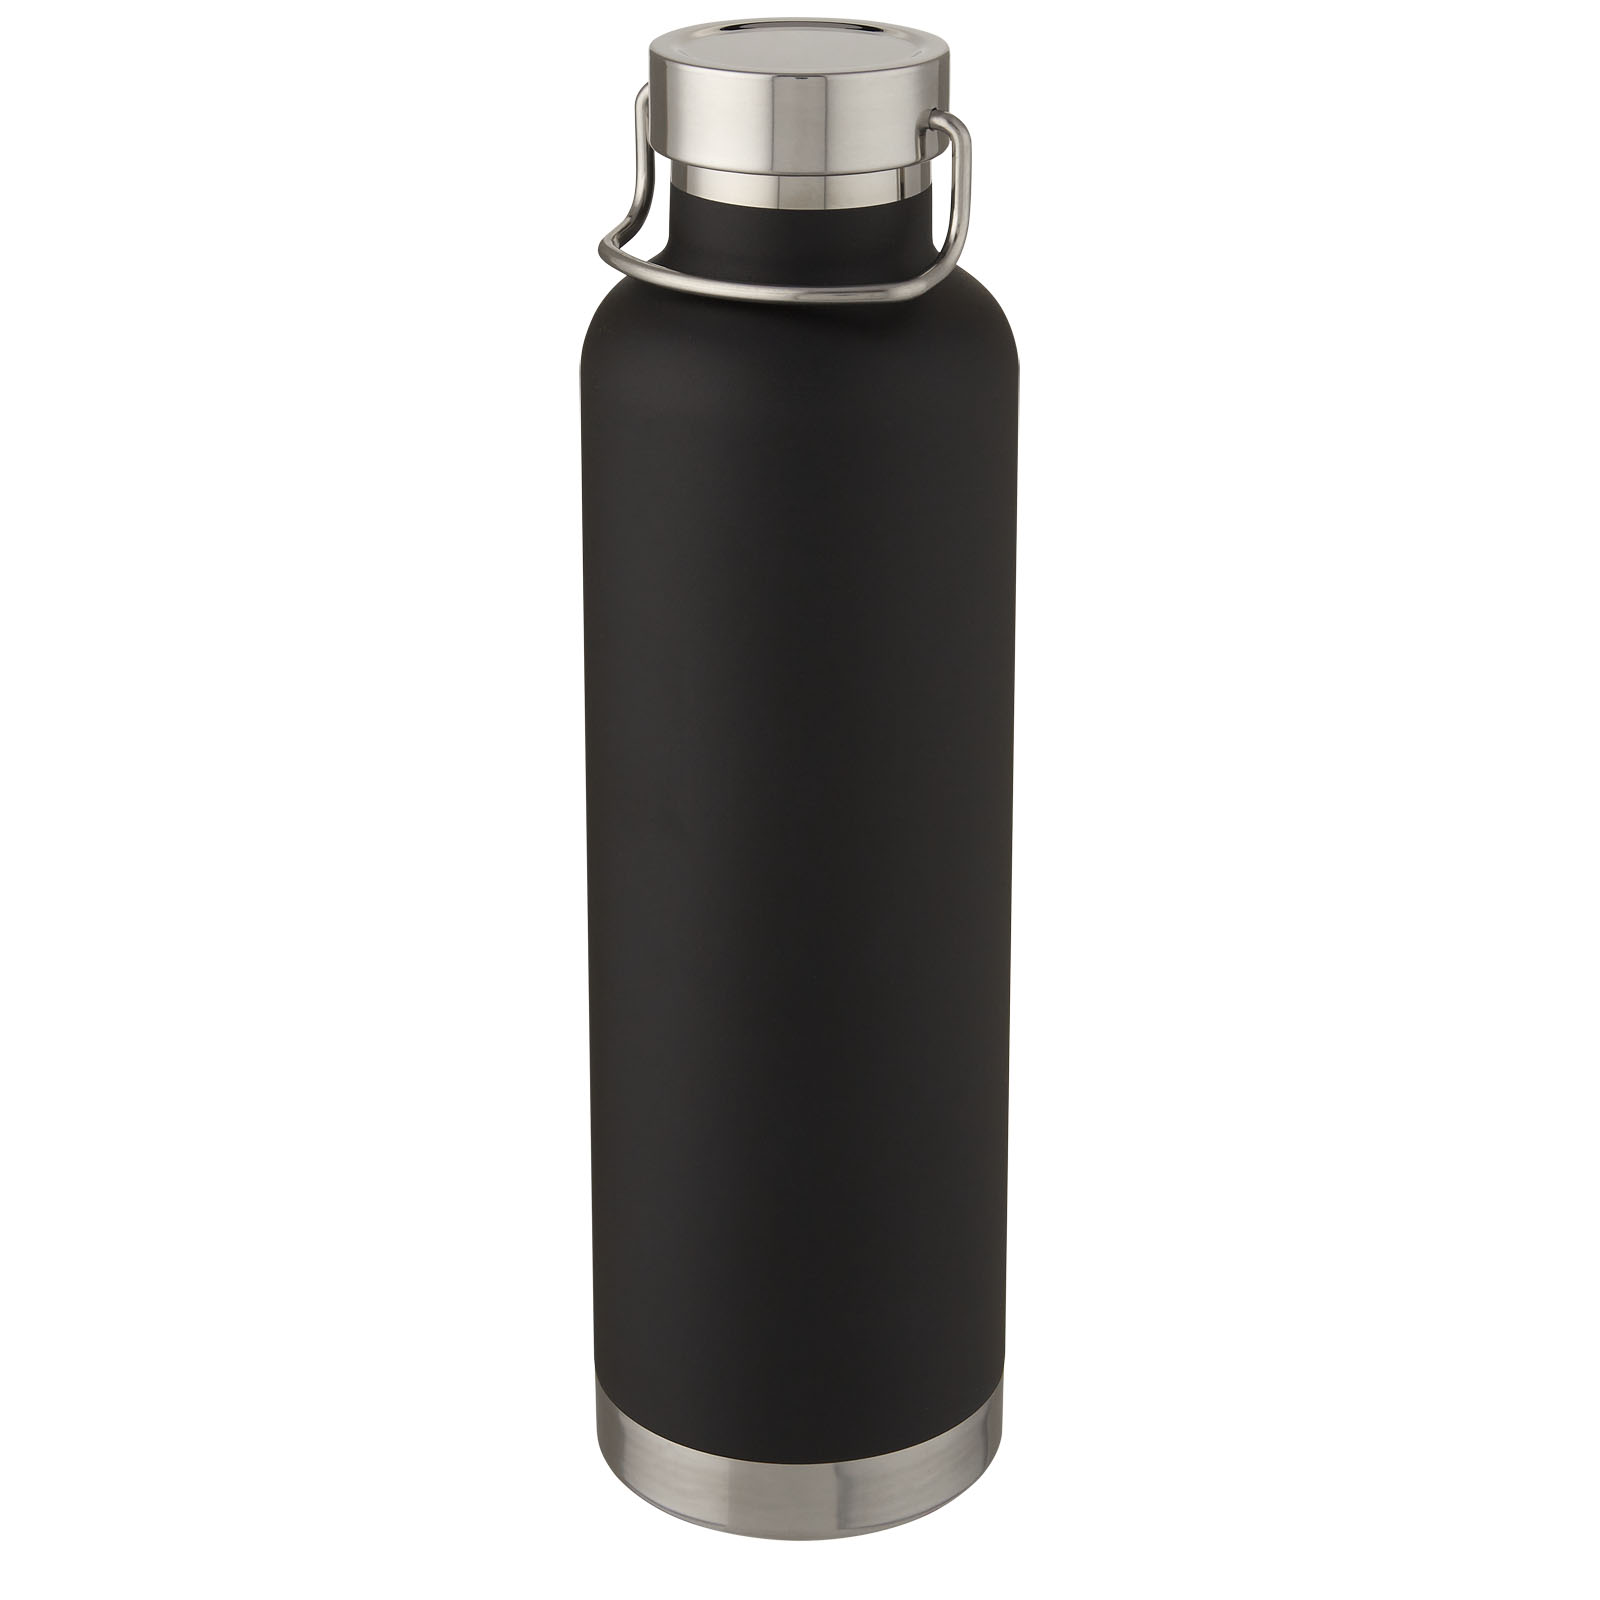 Metal sports bottle KELIAN with vacuum insulation, 1 l